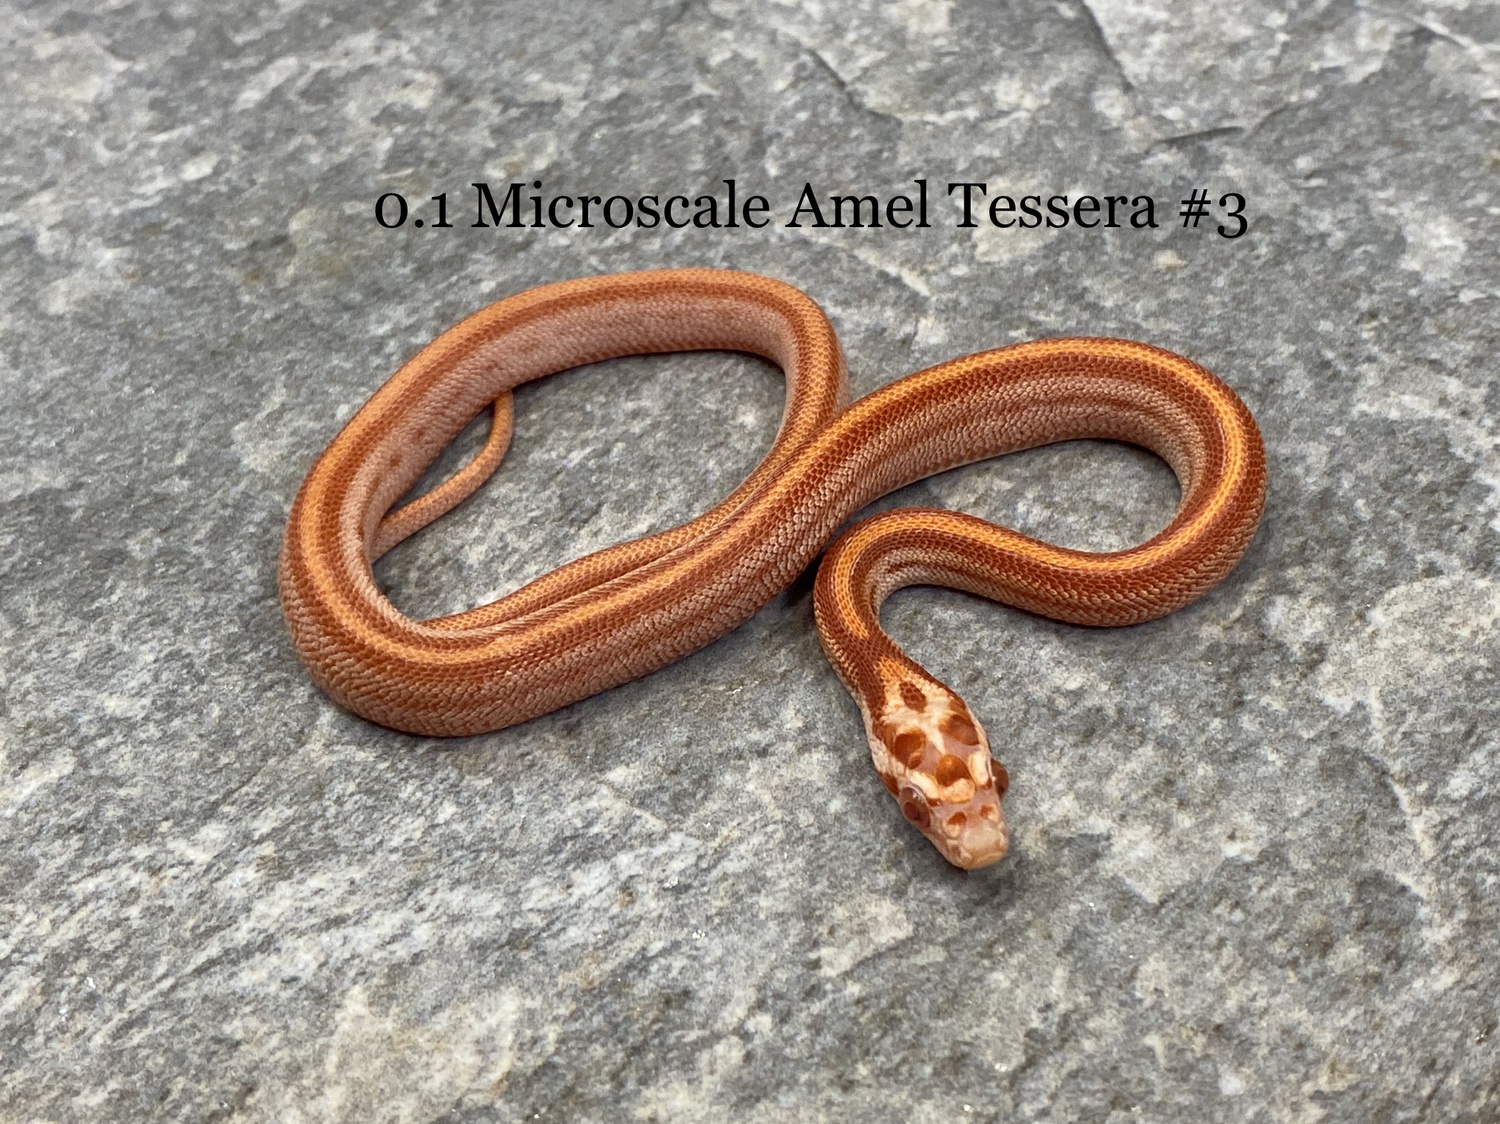 Microscale Amel Tessera 66% Het Anery, Motley Or Stripe Corn Snake by PrestigeCornsUK